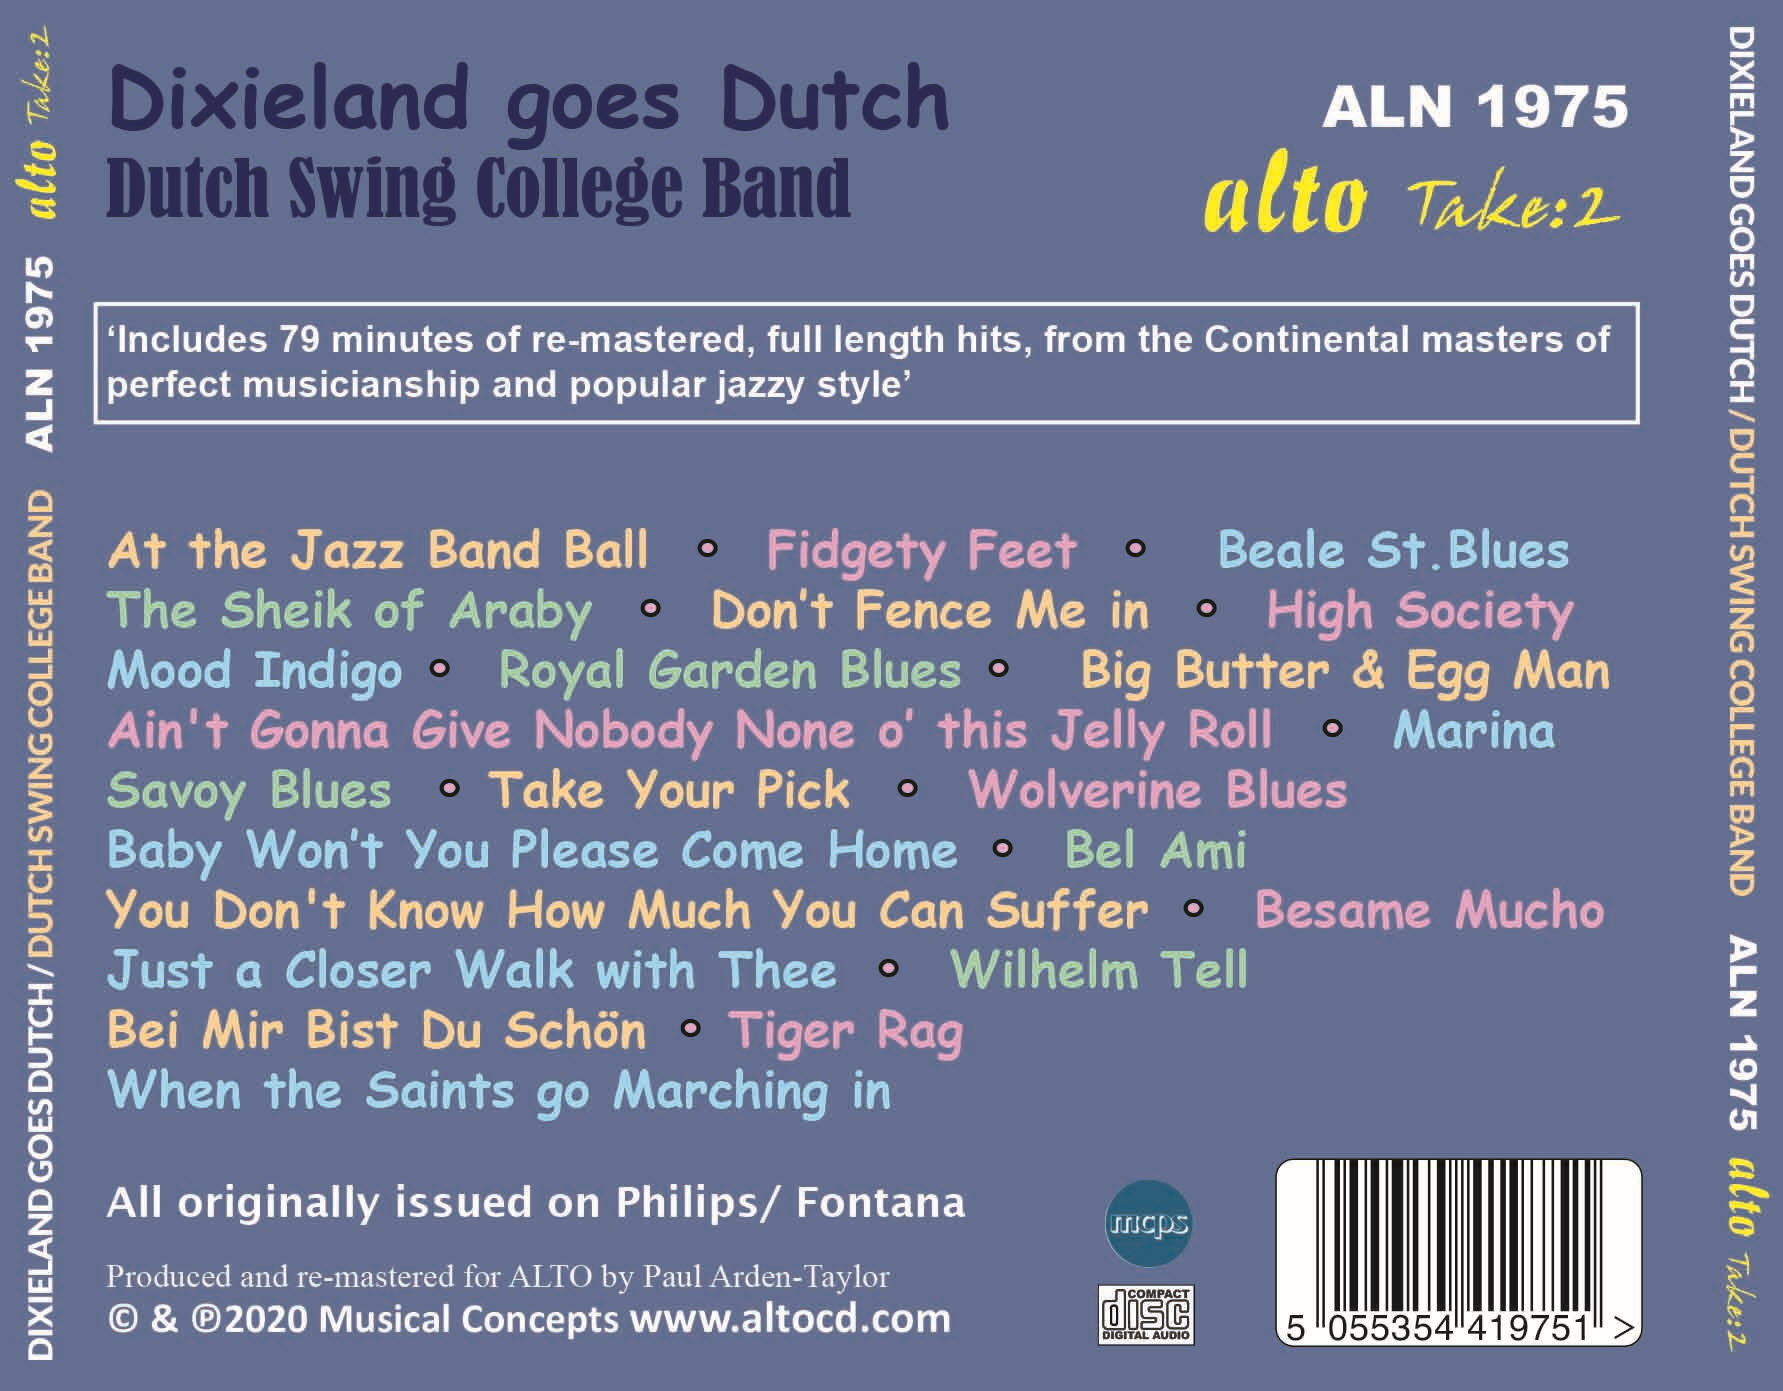 Dutch Swing College Band (더치 스윙 컬리지 밴드) - Dixieland Goes Dutch